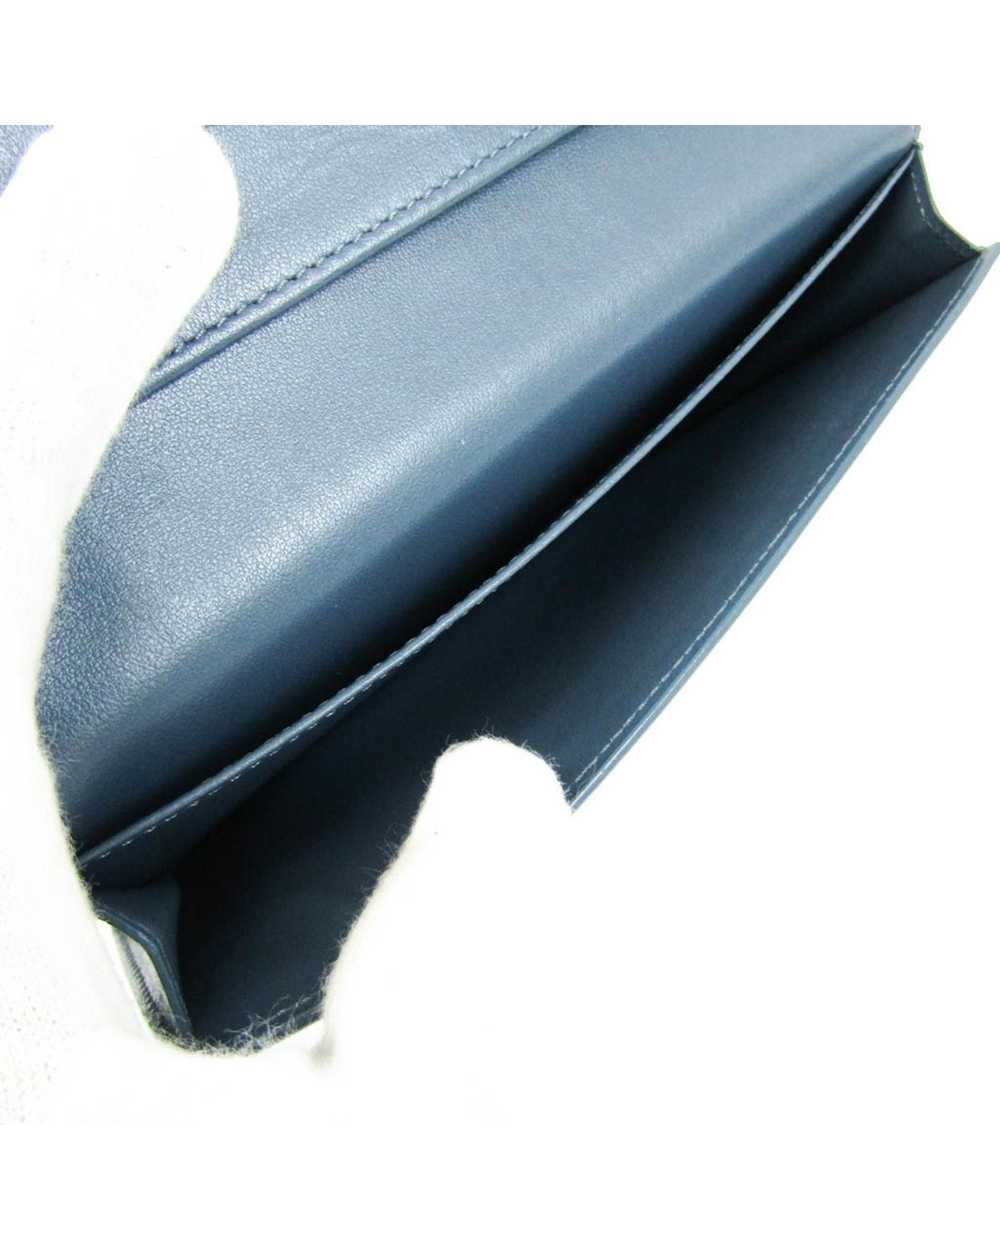 Celine Navy Leather Wallet - Practical and Elegant - image 10